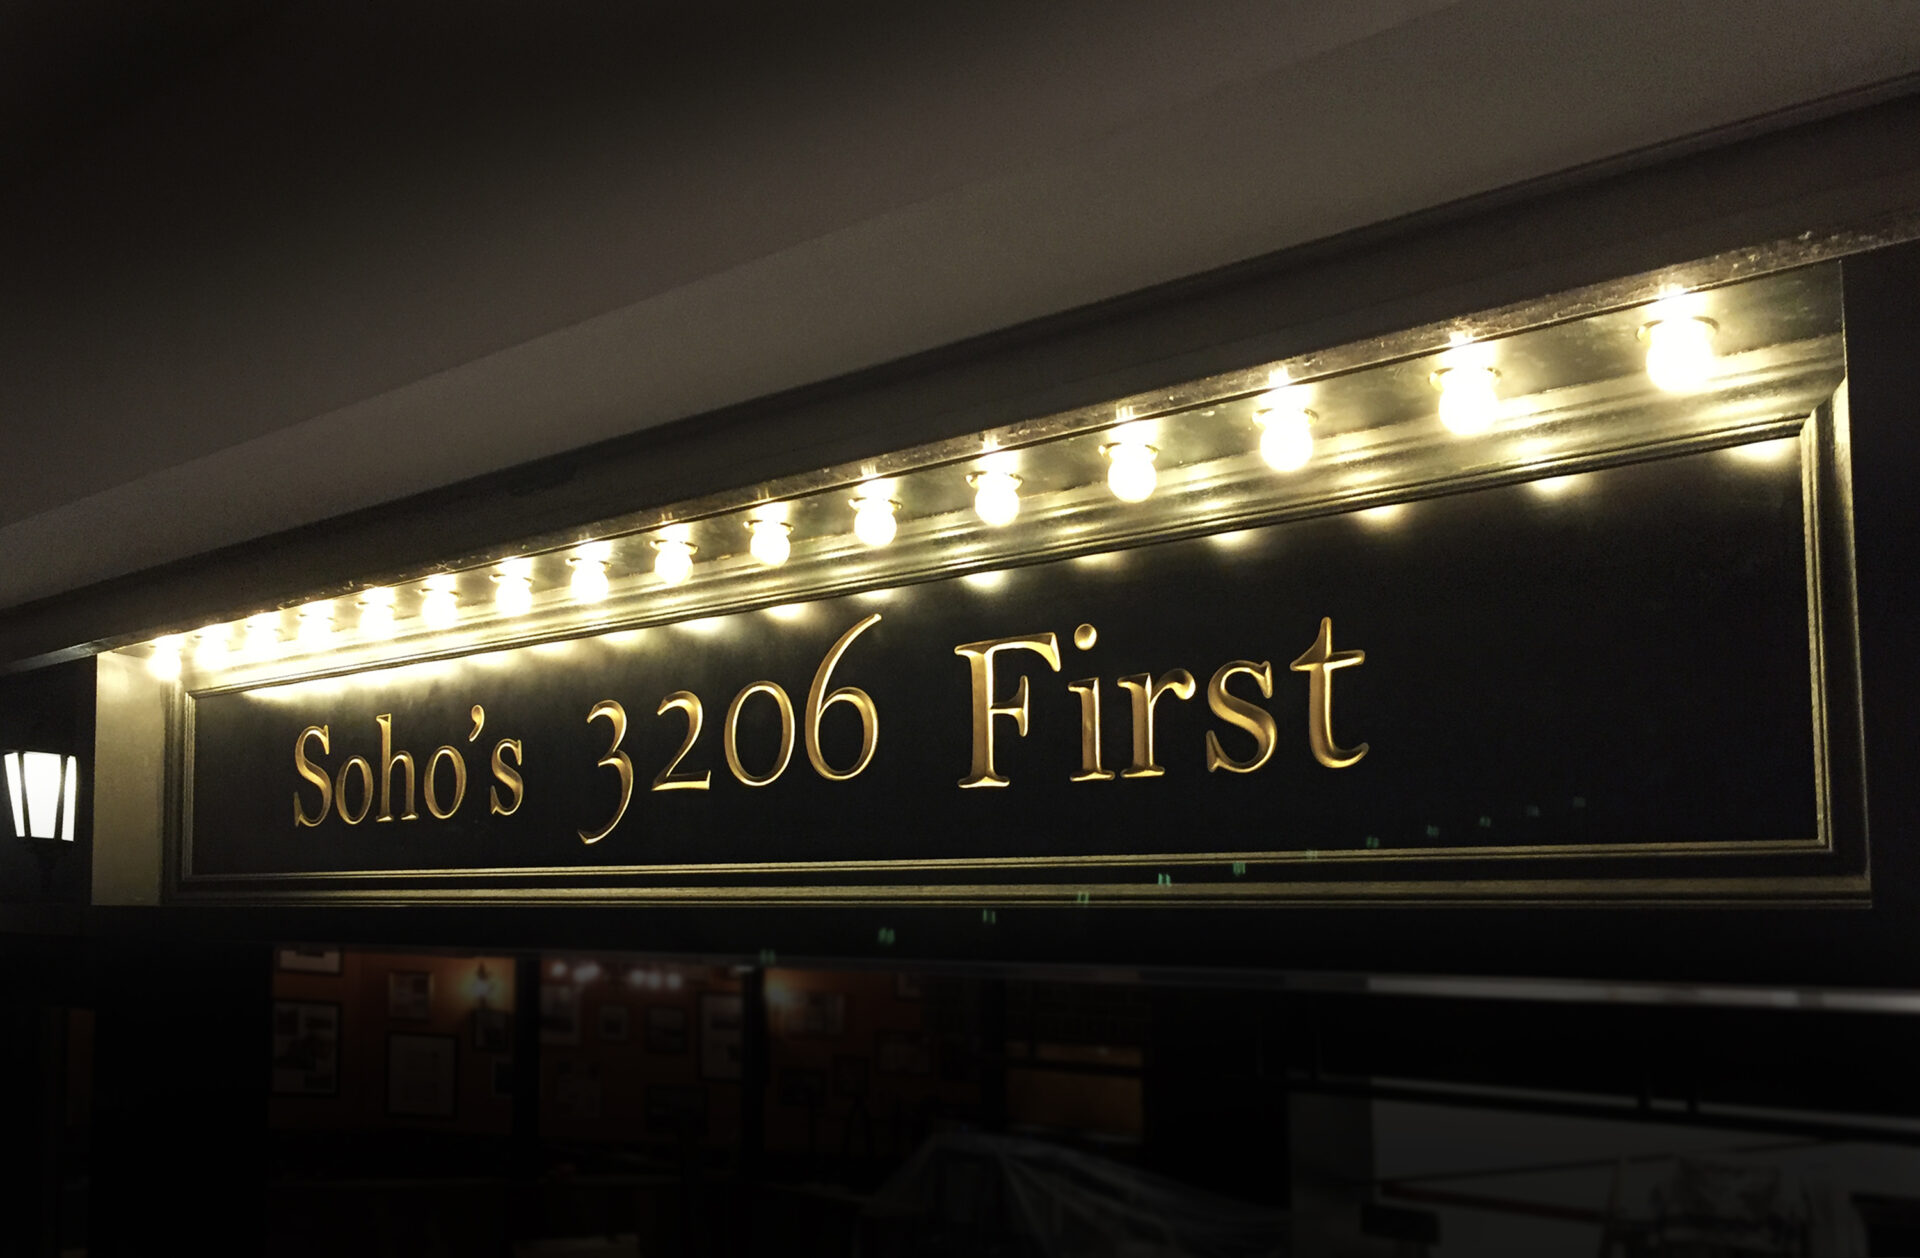 Soho’s 3206 First